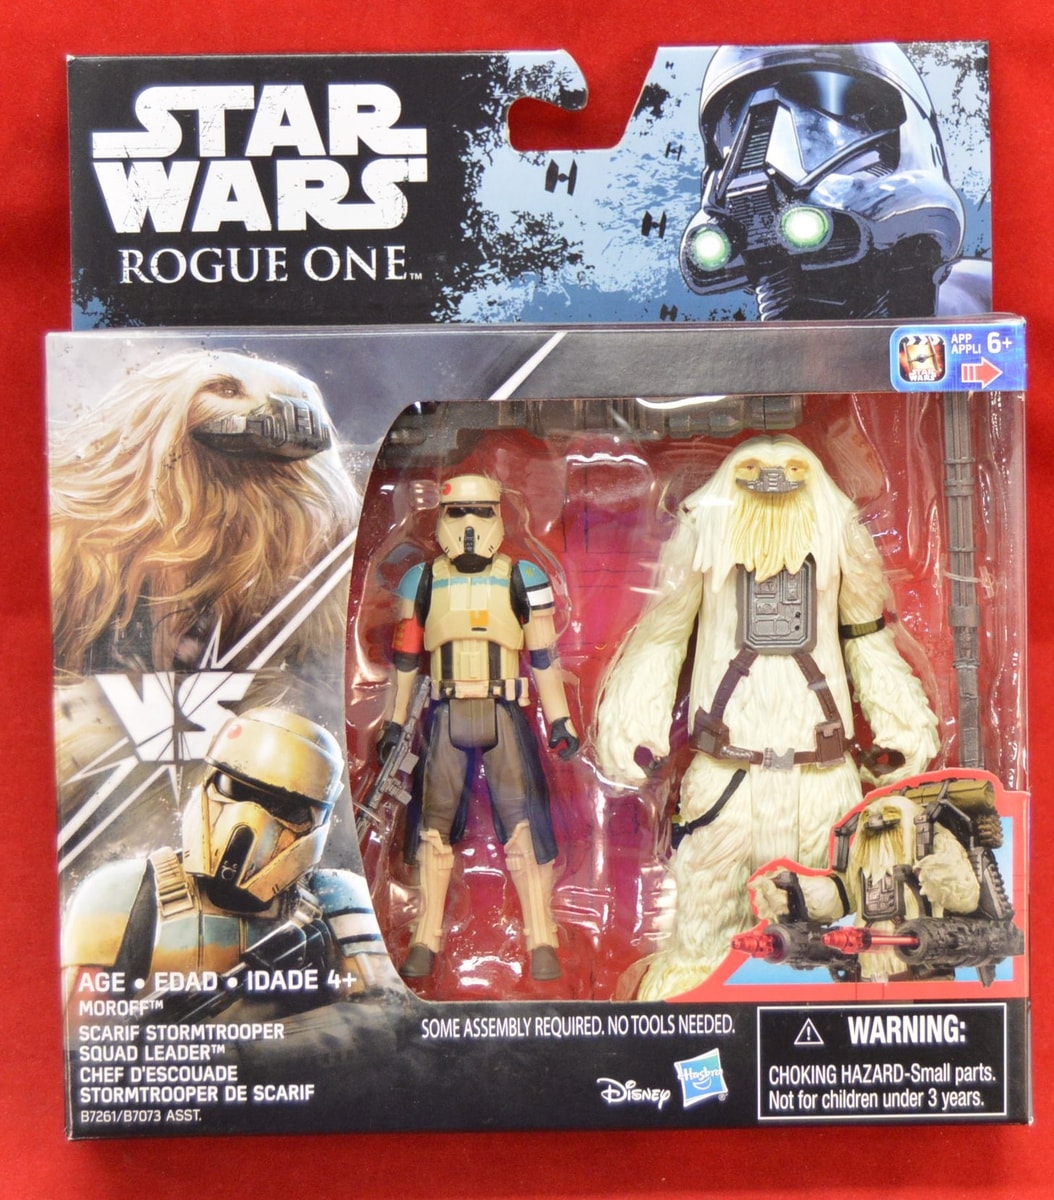 NEW 3.75" Hasbro STAR WARS 2-Pack Rogue 1 Scarif Stormtrooper Sq Leader & Moroff 